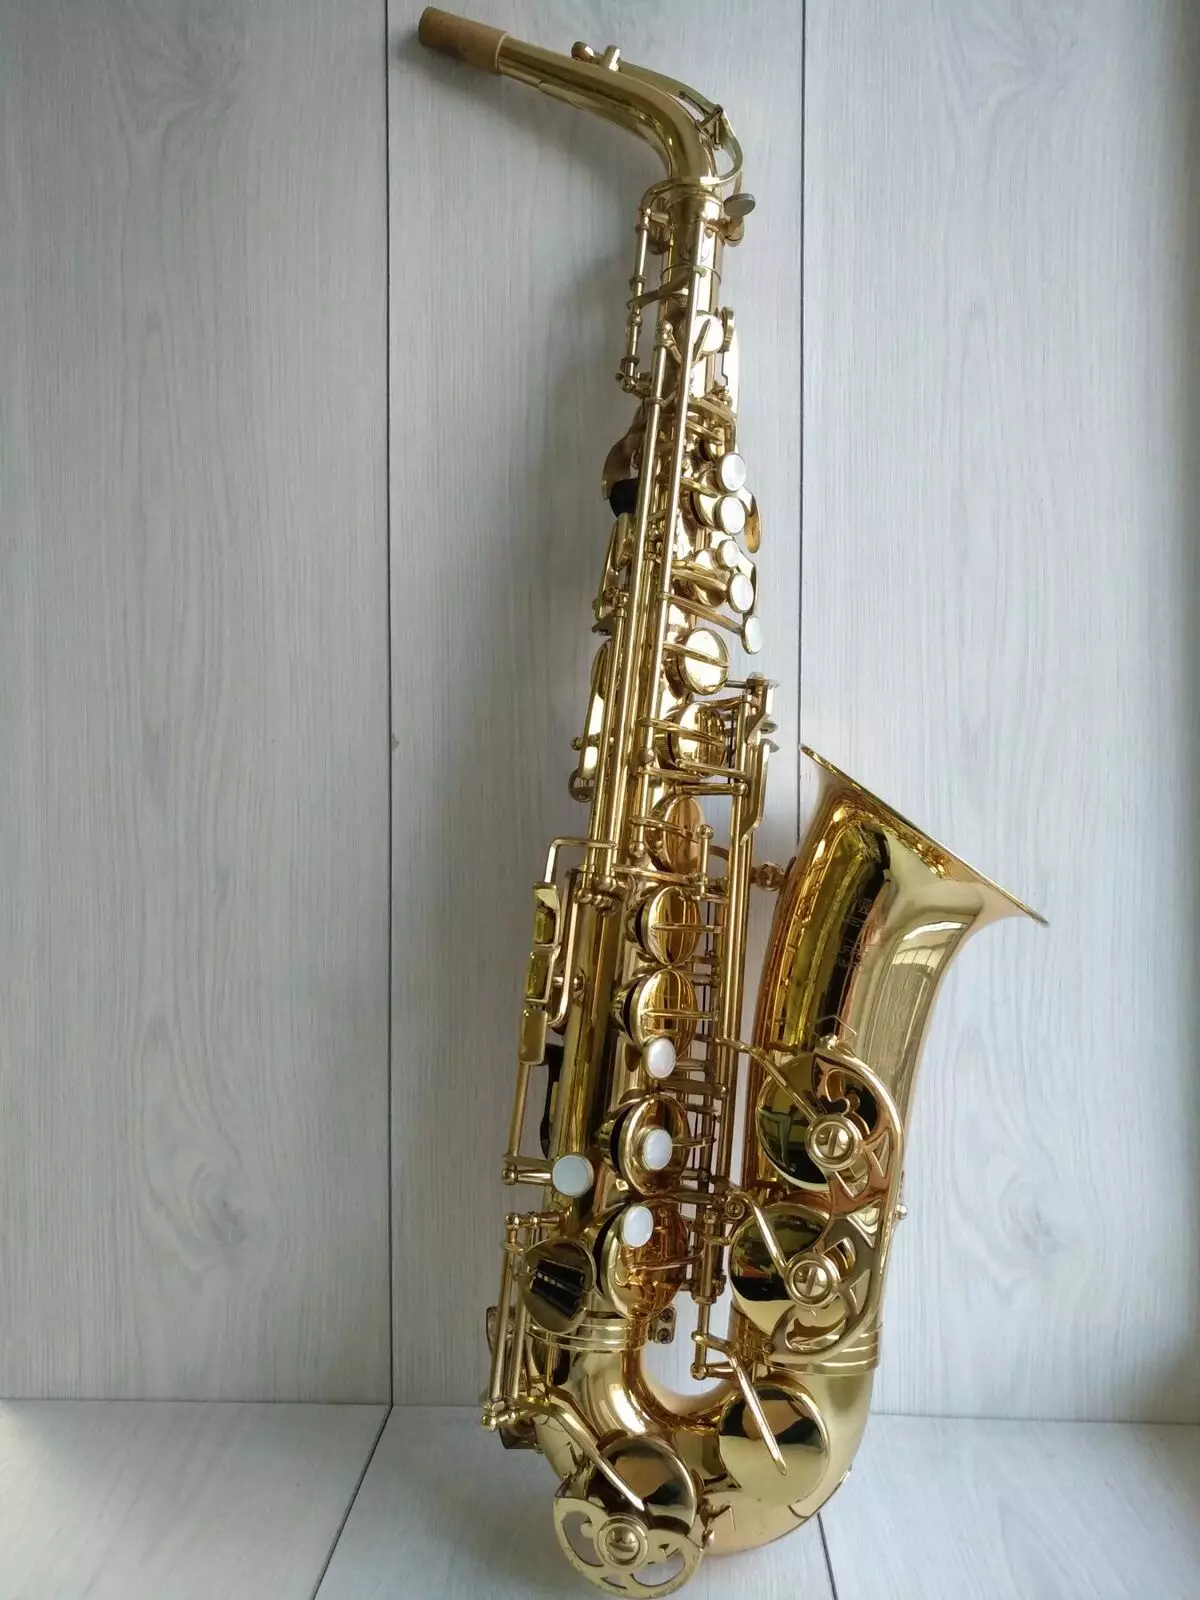 Saxophone (49 فوٹو): یہ کیا ہے؟ کرایہ اور سوپرانو، بارٹون اور دیگر پرجاتیوں، کینوں اور گدھے کا انتخاب. یہ کیا نظر آتا ہے اور یہ کیسے لگتا ہے؟ 25581_47